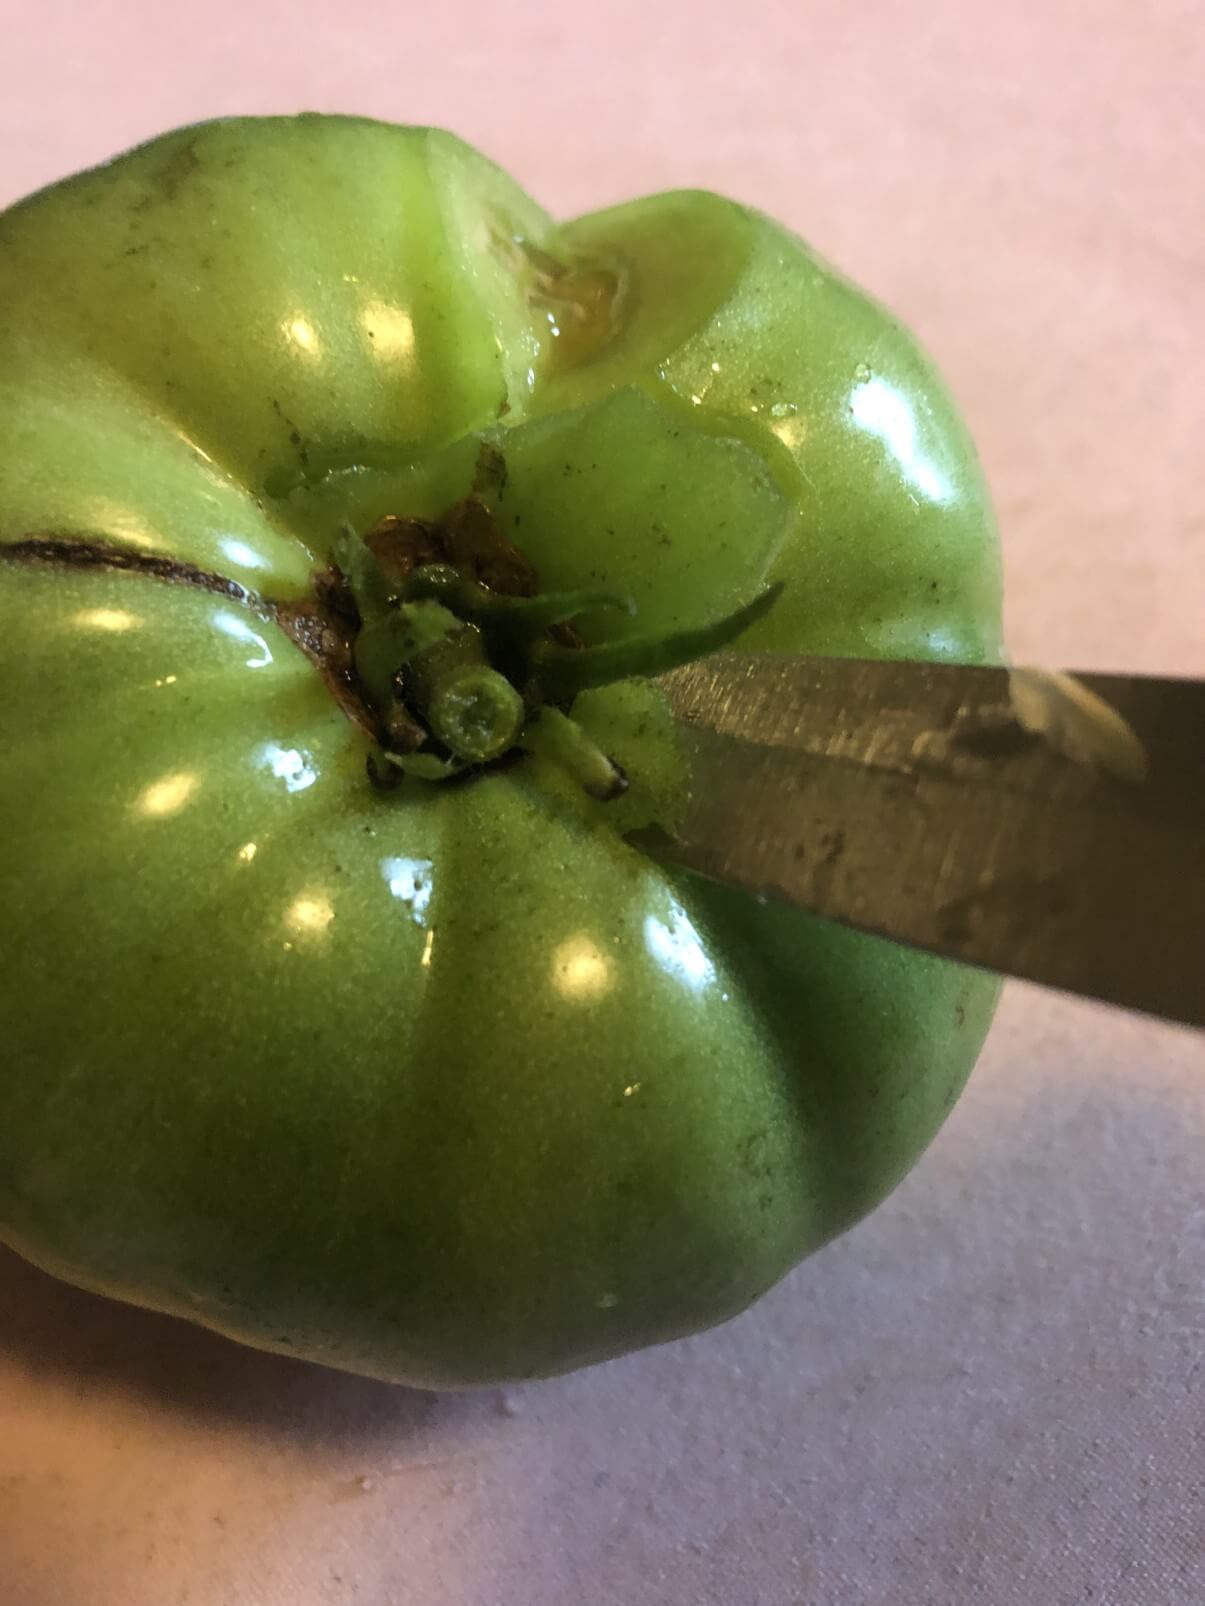 coring a green tomato